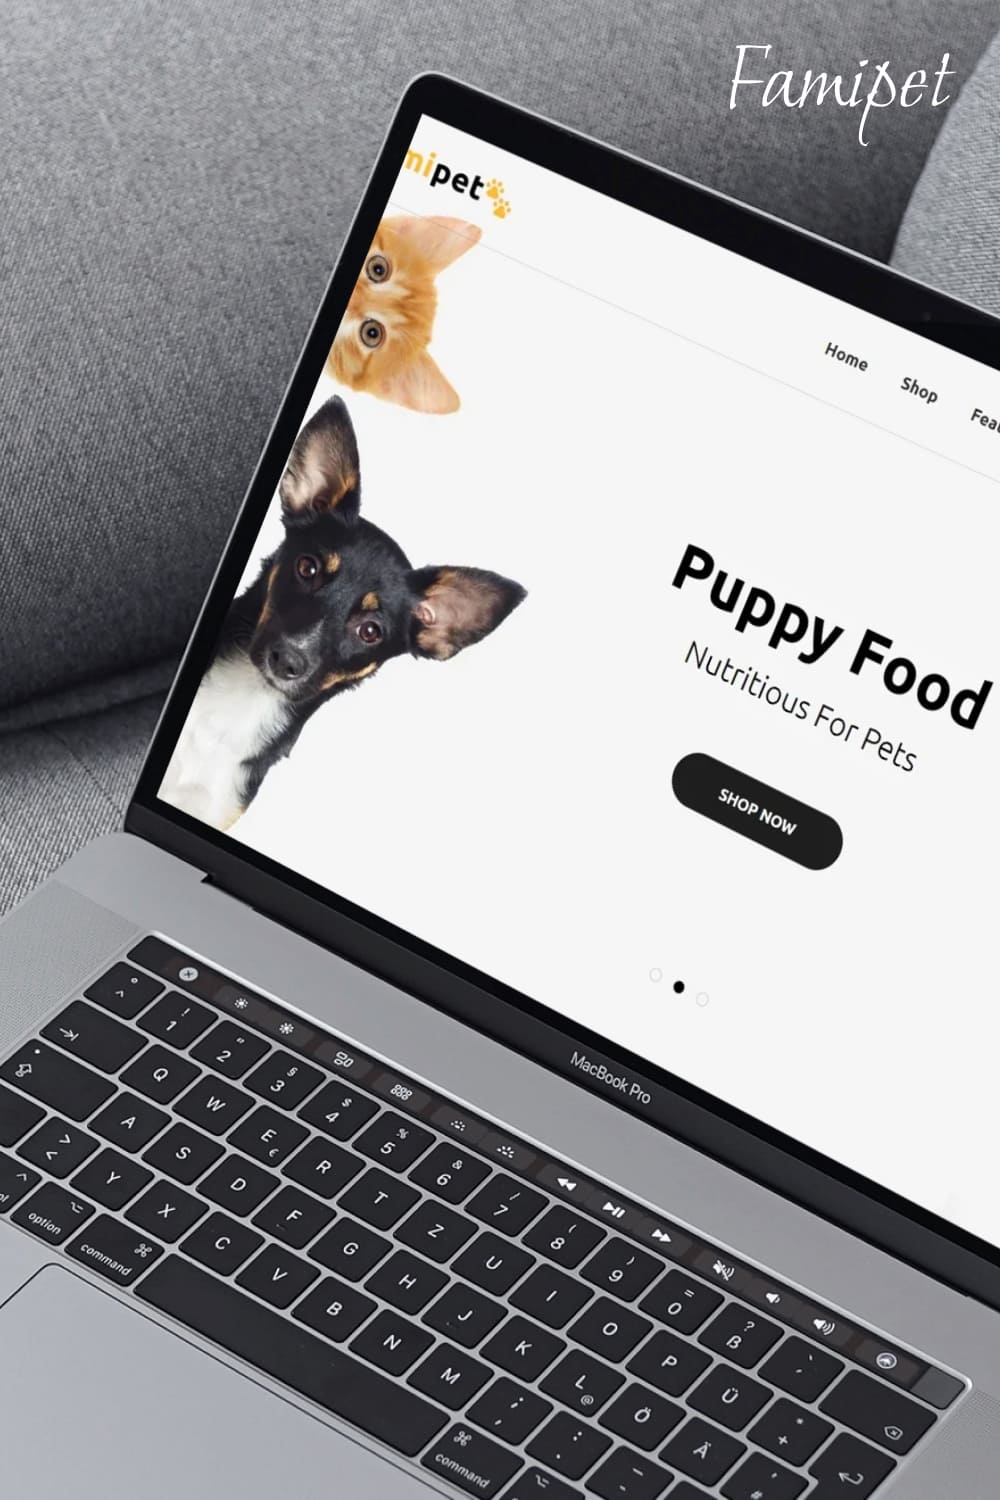 Famipet - Pet Shop Shopify Theme - laptop mockup for pinterest image.